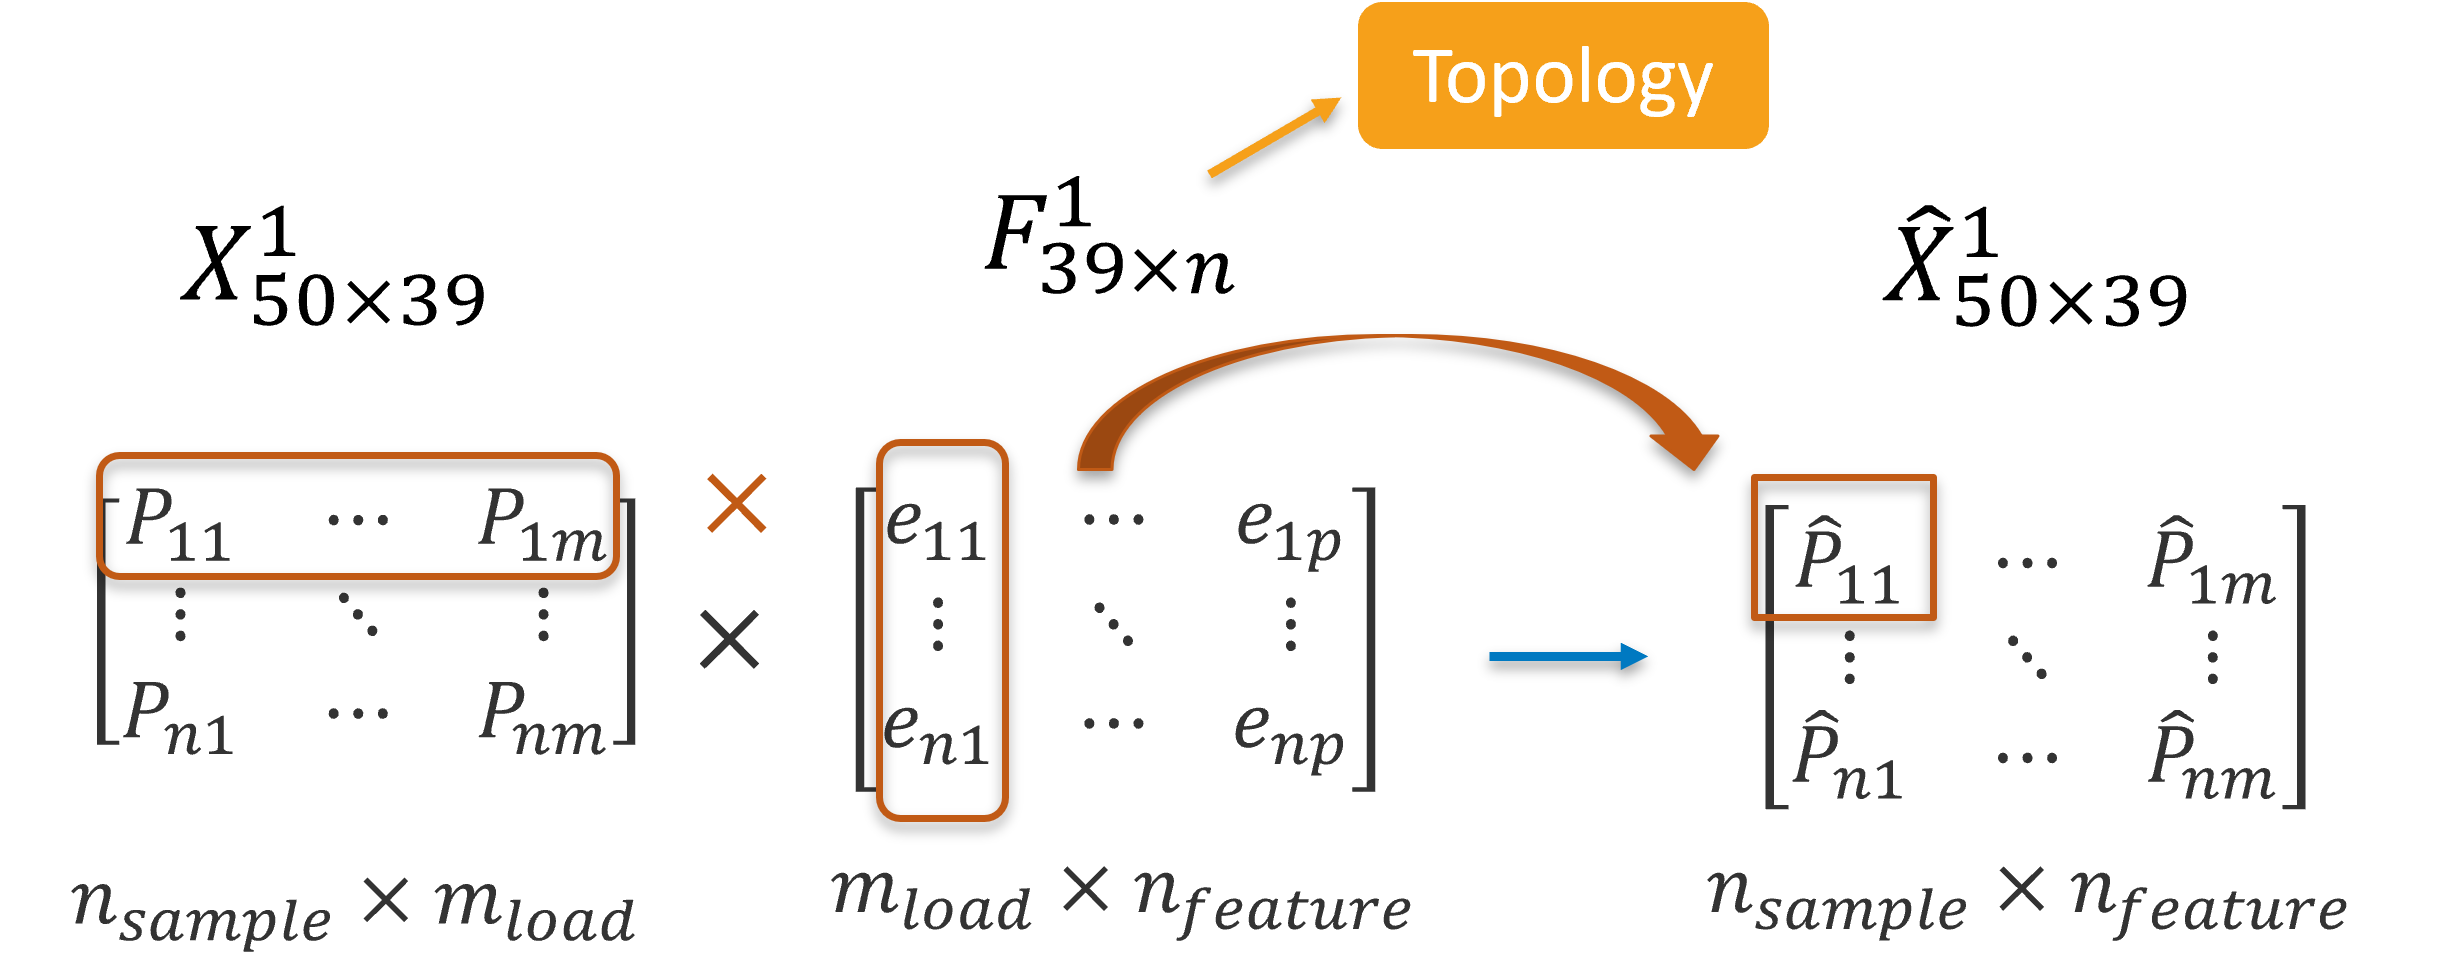 Topology embedding through matrix multiplication